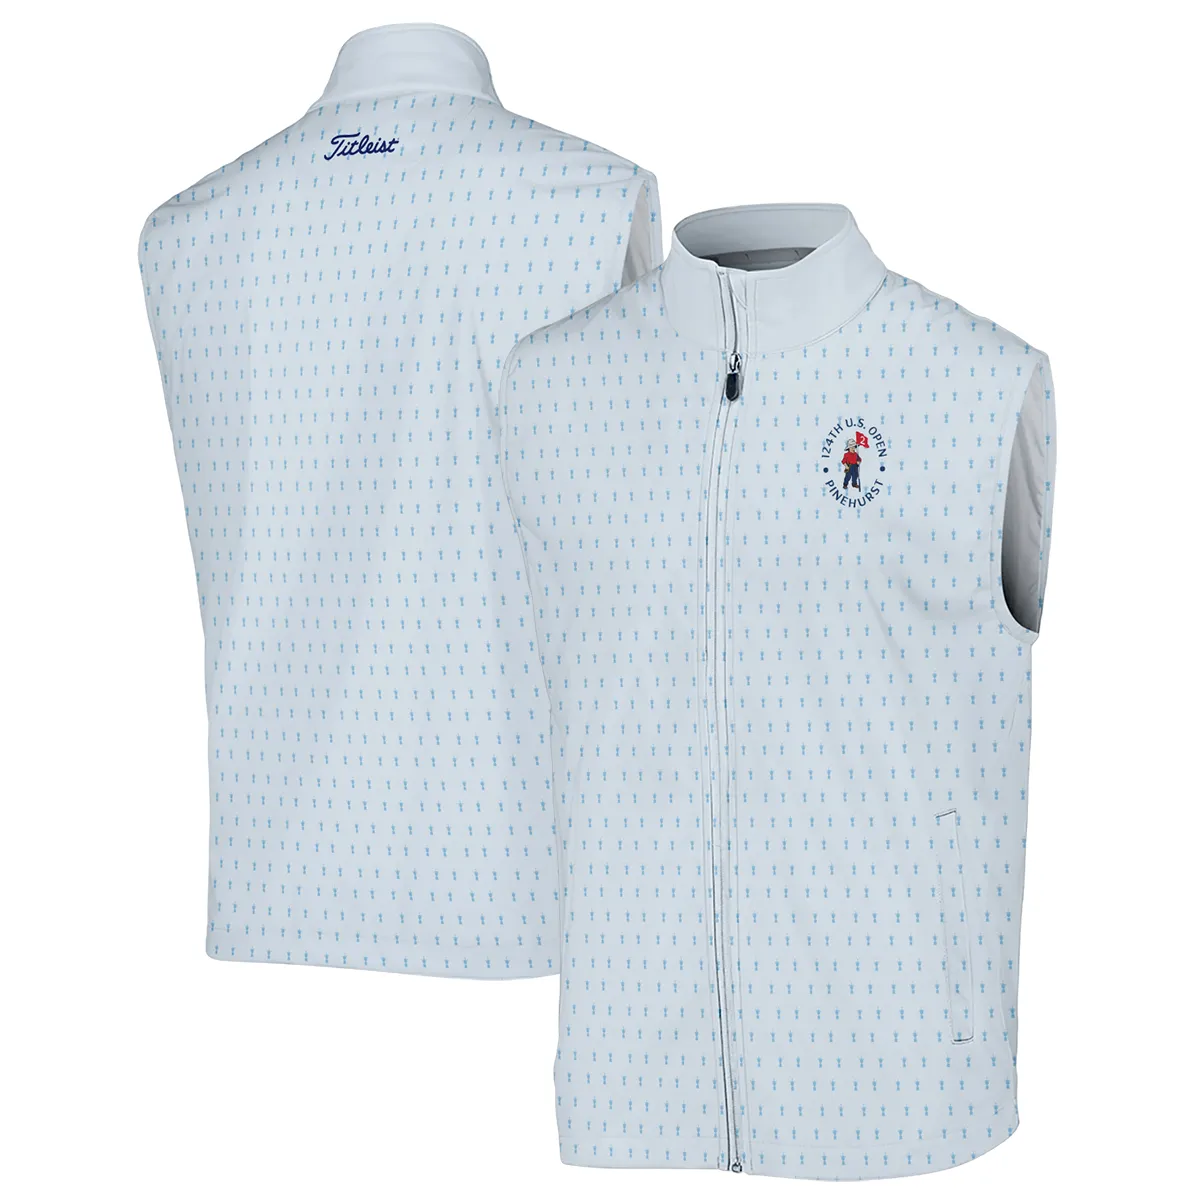 Golf Pattern Light Blue Cup 124th U.S. Open Pinehurst Titleist Hoodie Shirt Style Classic